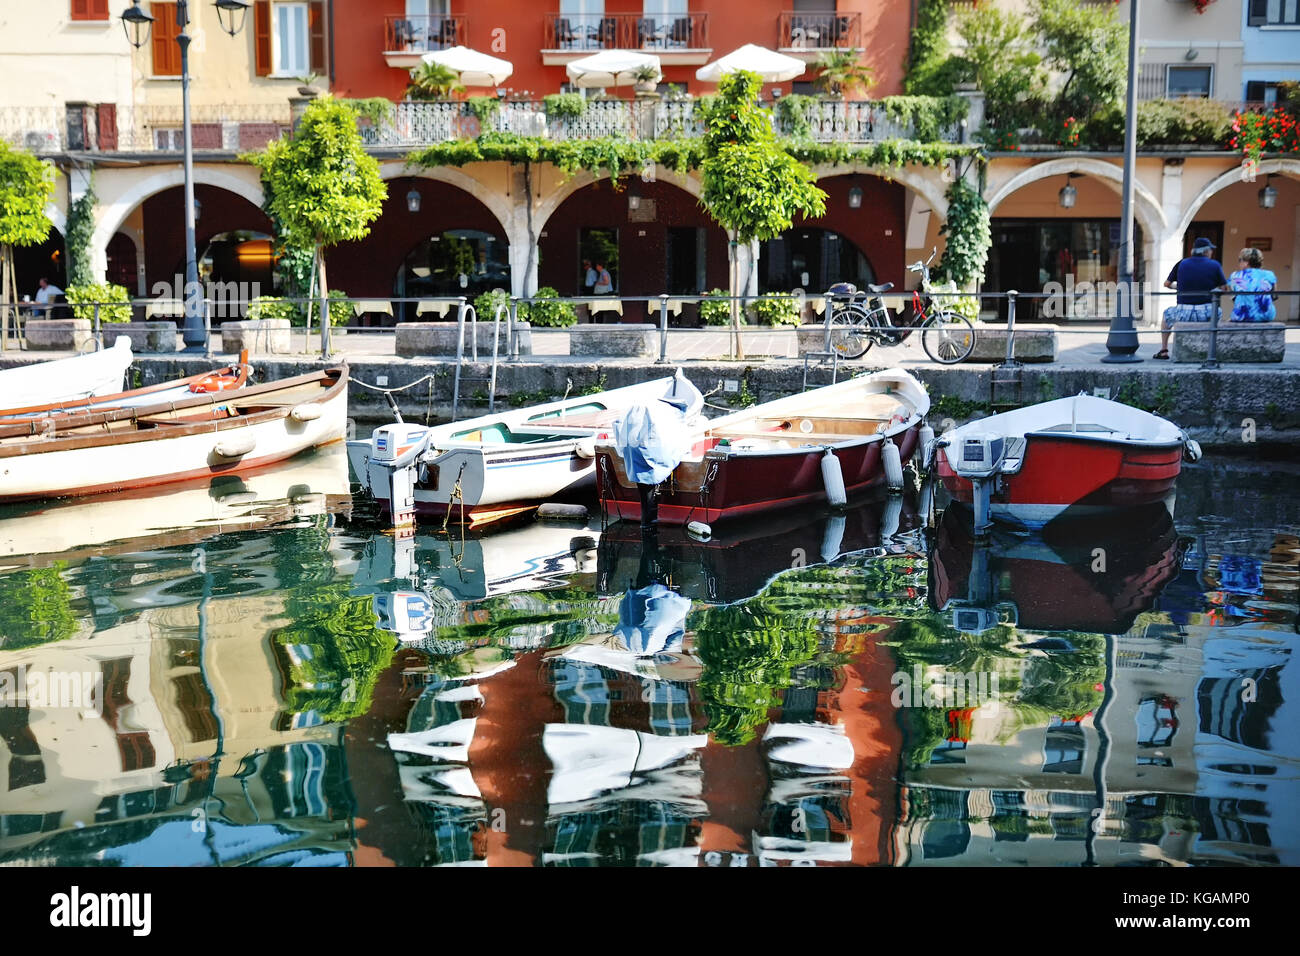 Boats on Garda lake, Desenzano del Garda, Lombardy, Italy Stock Photo